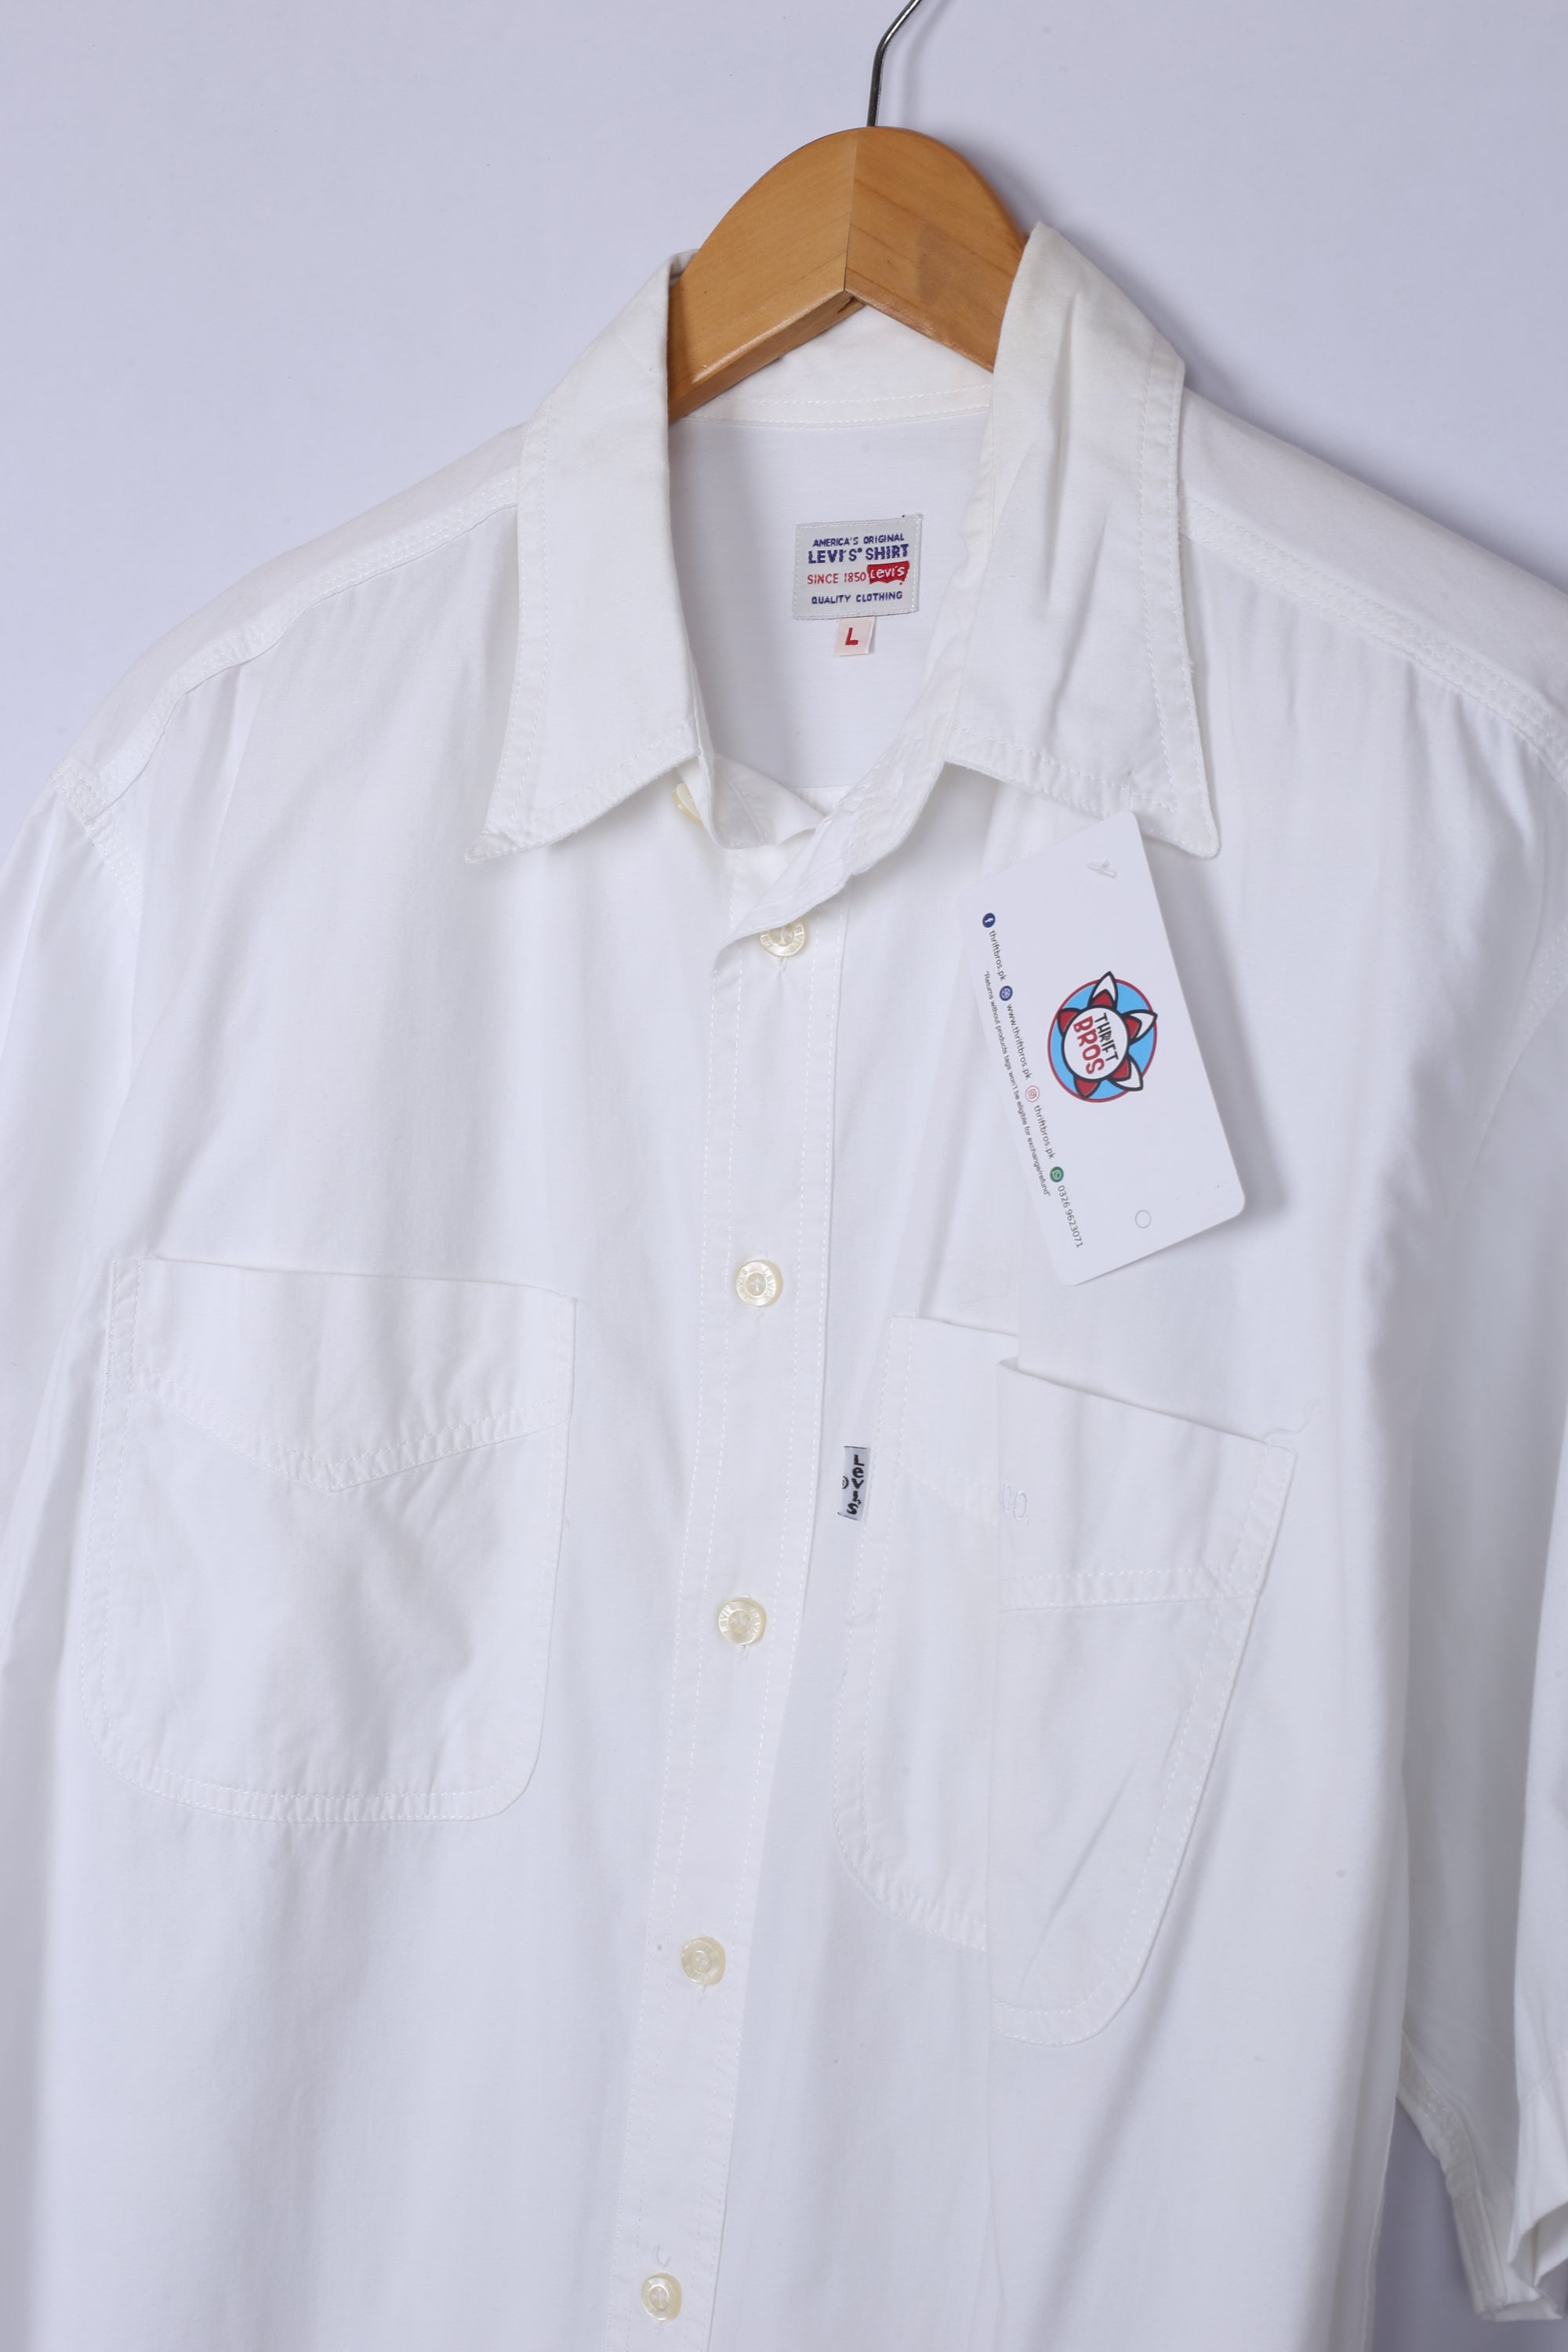 Vintage 90's Levis Half Sleeve Shirt White